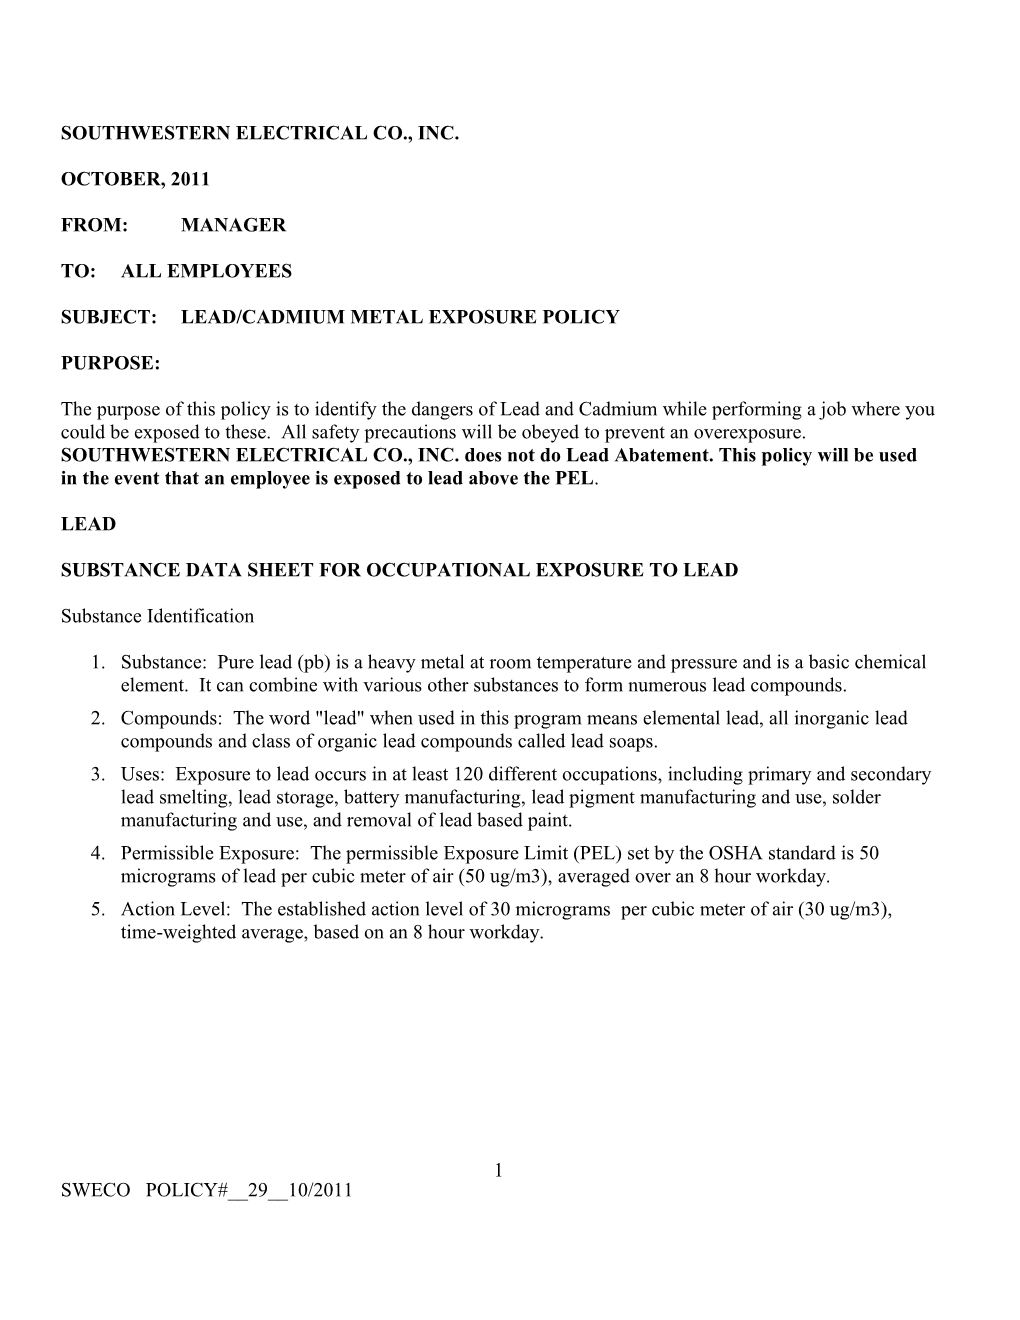 Subject: Lead/Cadmium Metal Exposure Policy